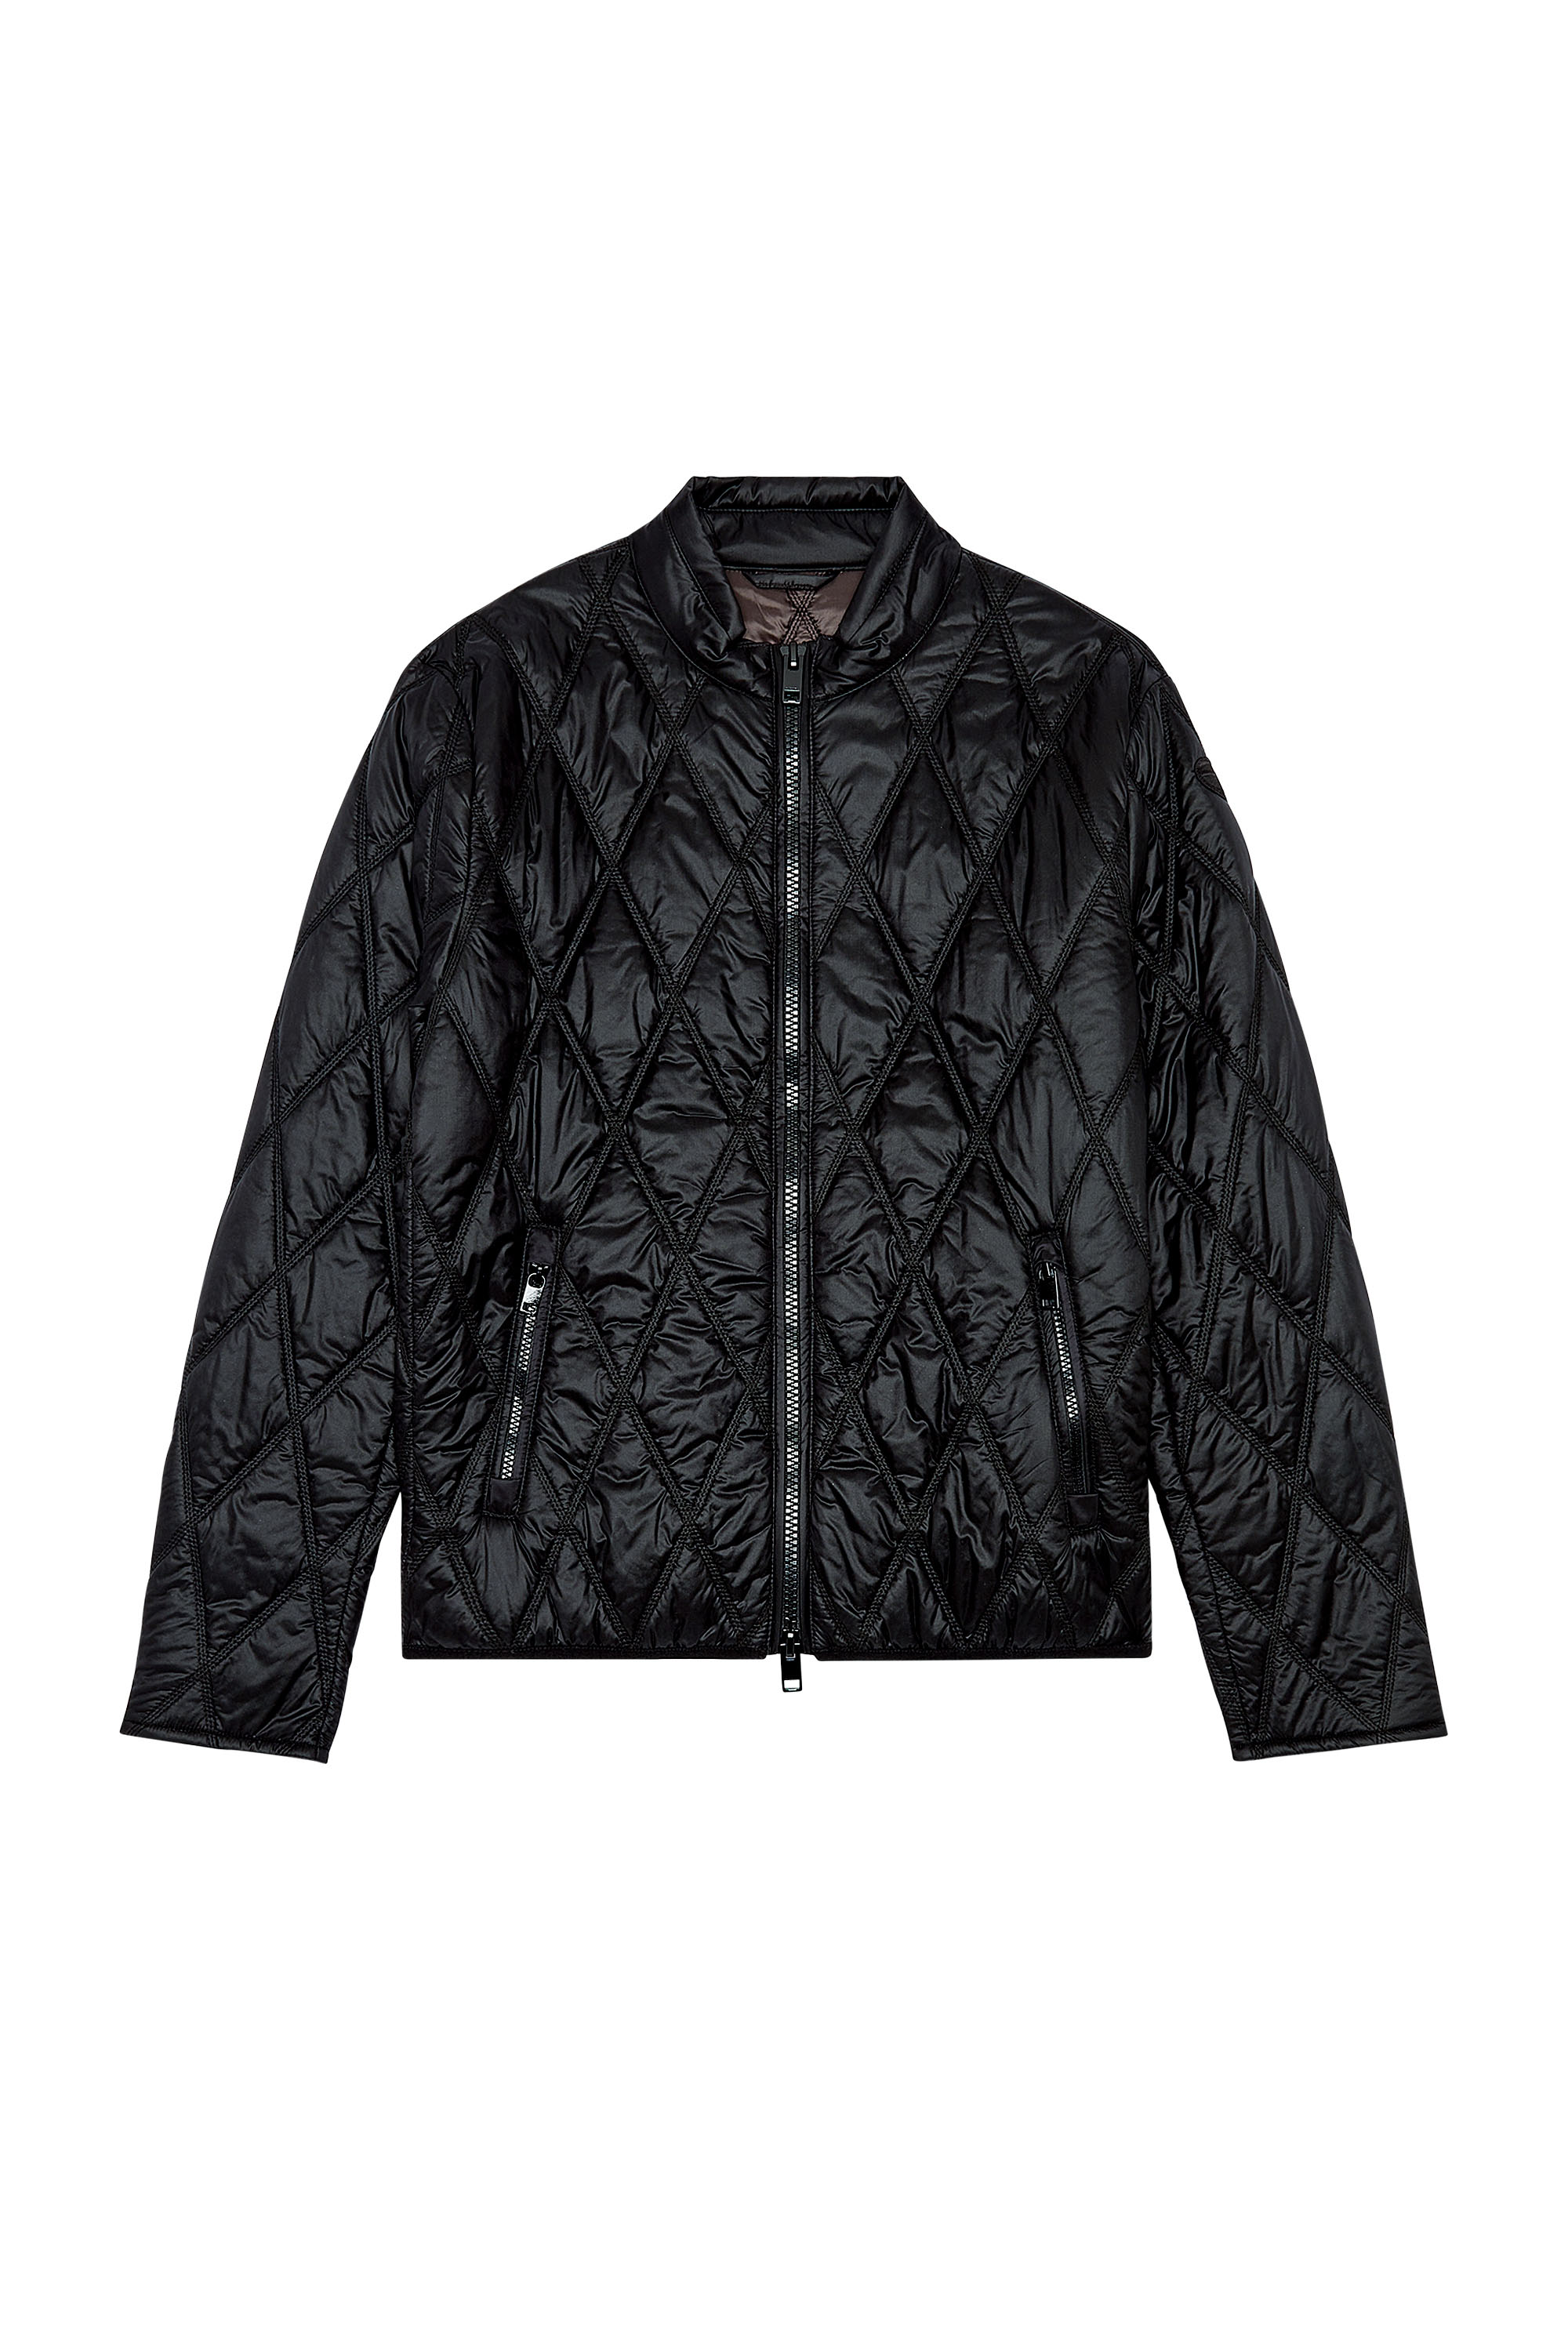 Diesel - J-NIEL, Man Mock-neck jacket in quilted nylon in Black - Image 3